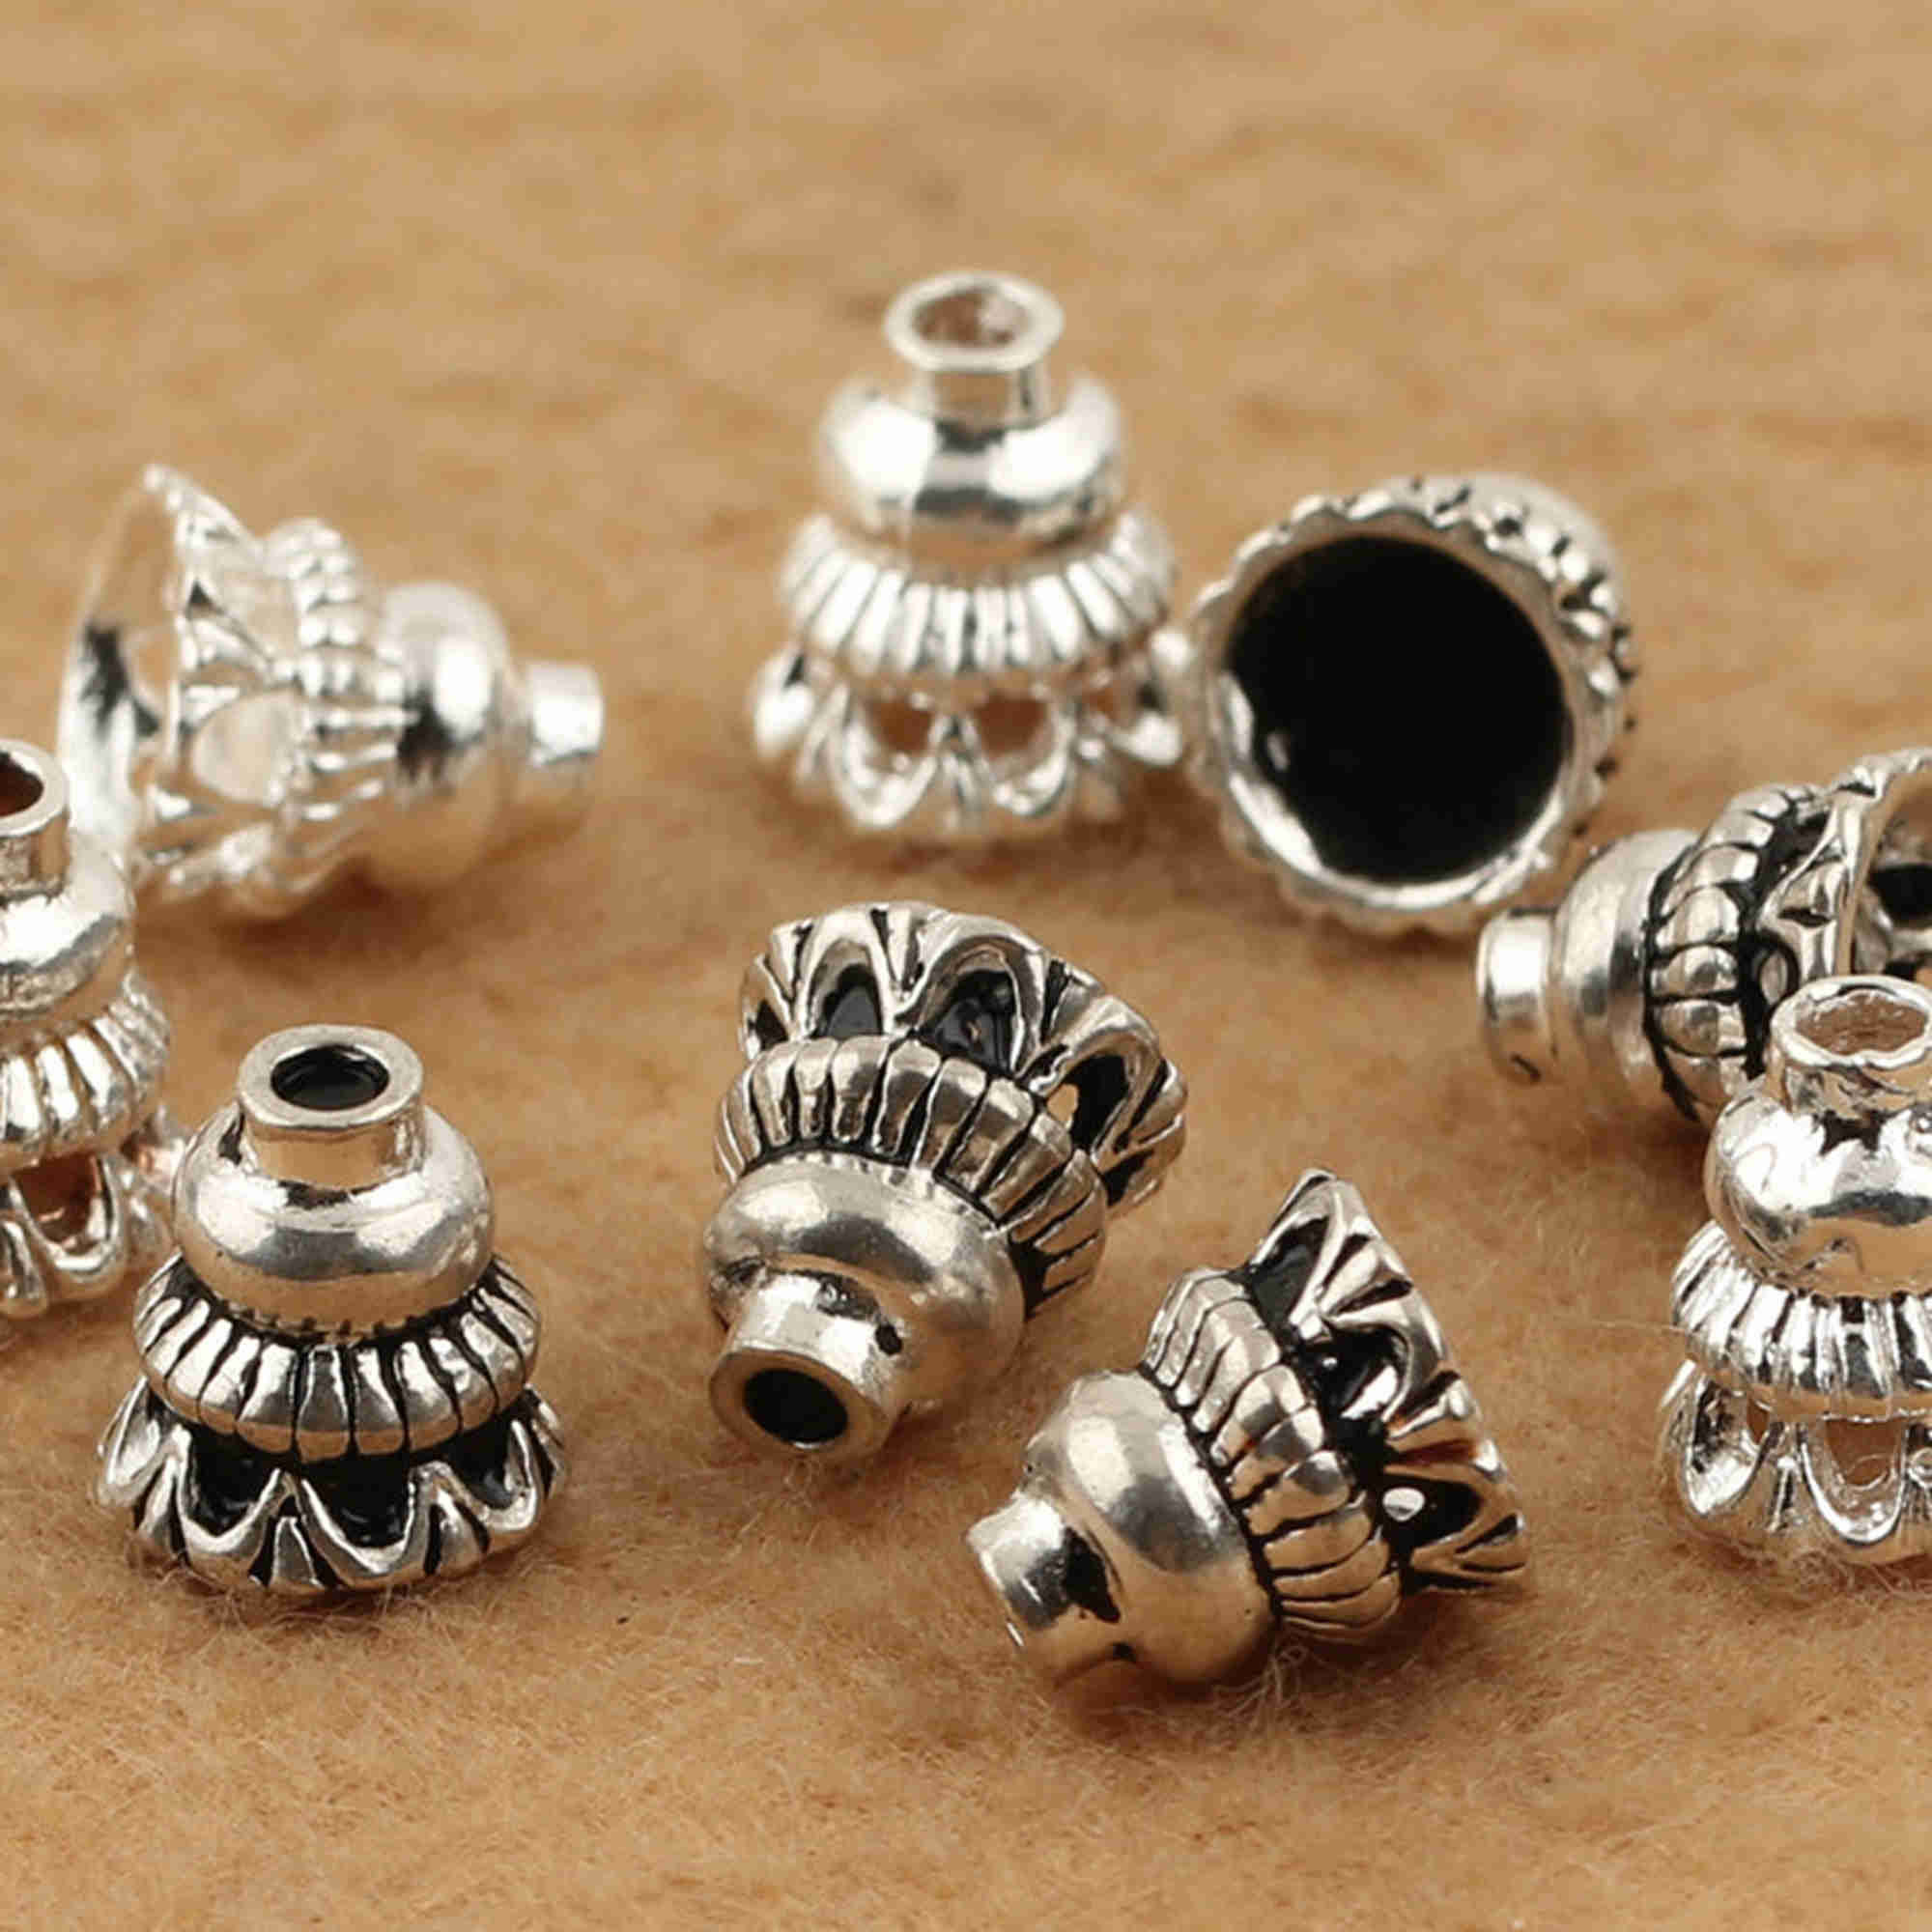 30pcs Bead Cone Metal End Caps Apetalous Spacer Beads Stopper Terminators  For DIY Earrings Bracelet Jewelry Making Supplies, Golden/Silvery/Bronze